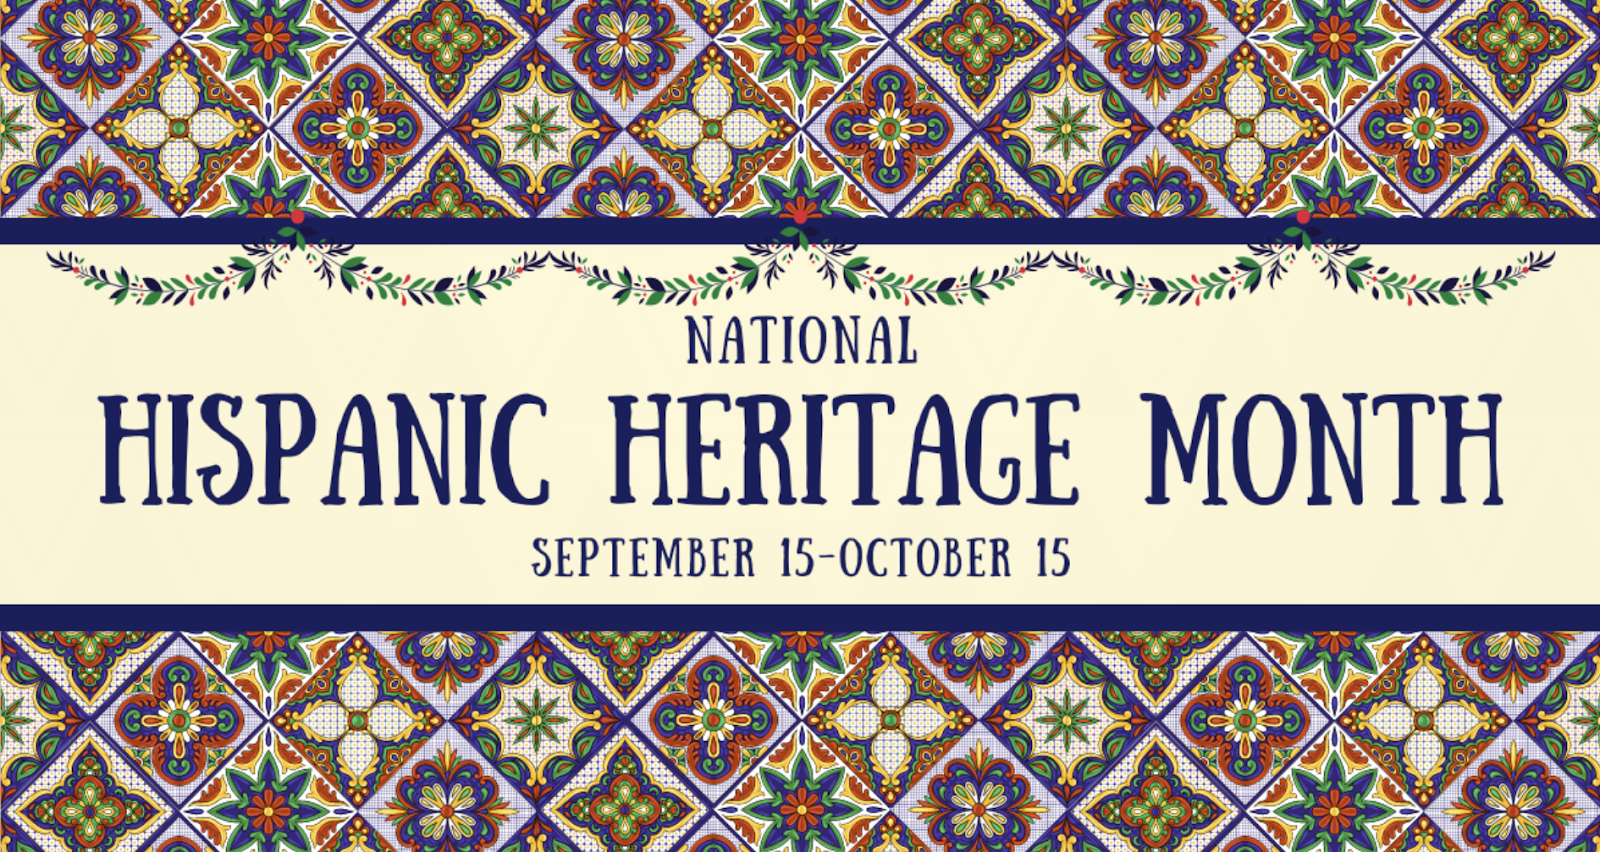 National Hispanic Heritage Month: Sept. 15-Oct. 15